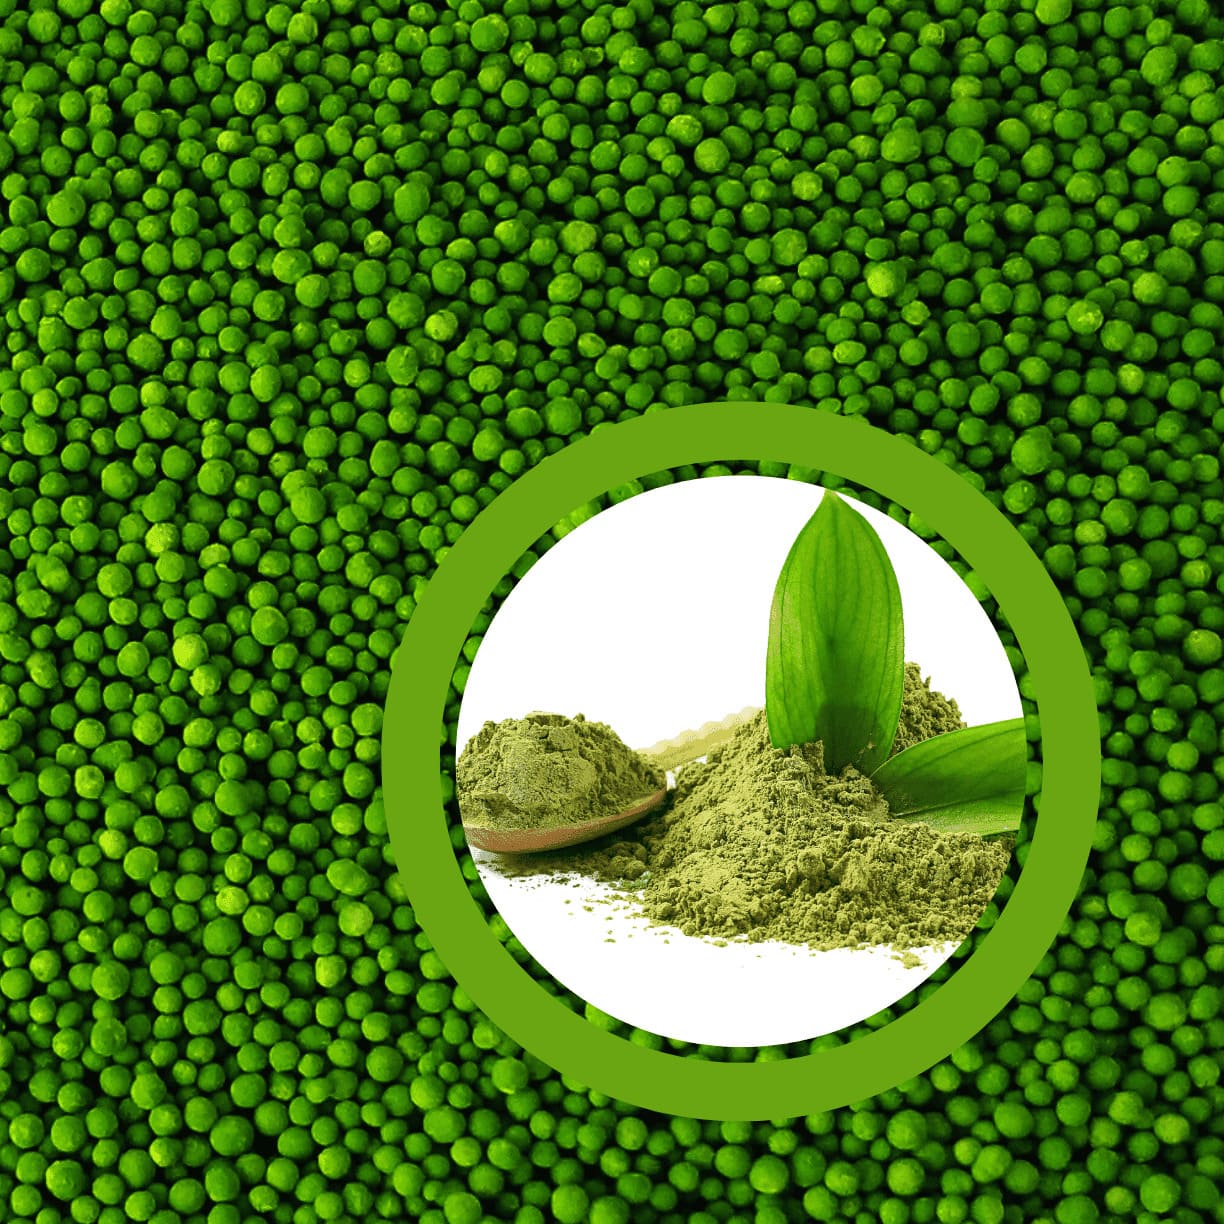 Encapsulated-Green-Tea-Encapsulated-Beads